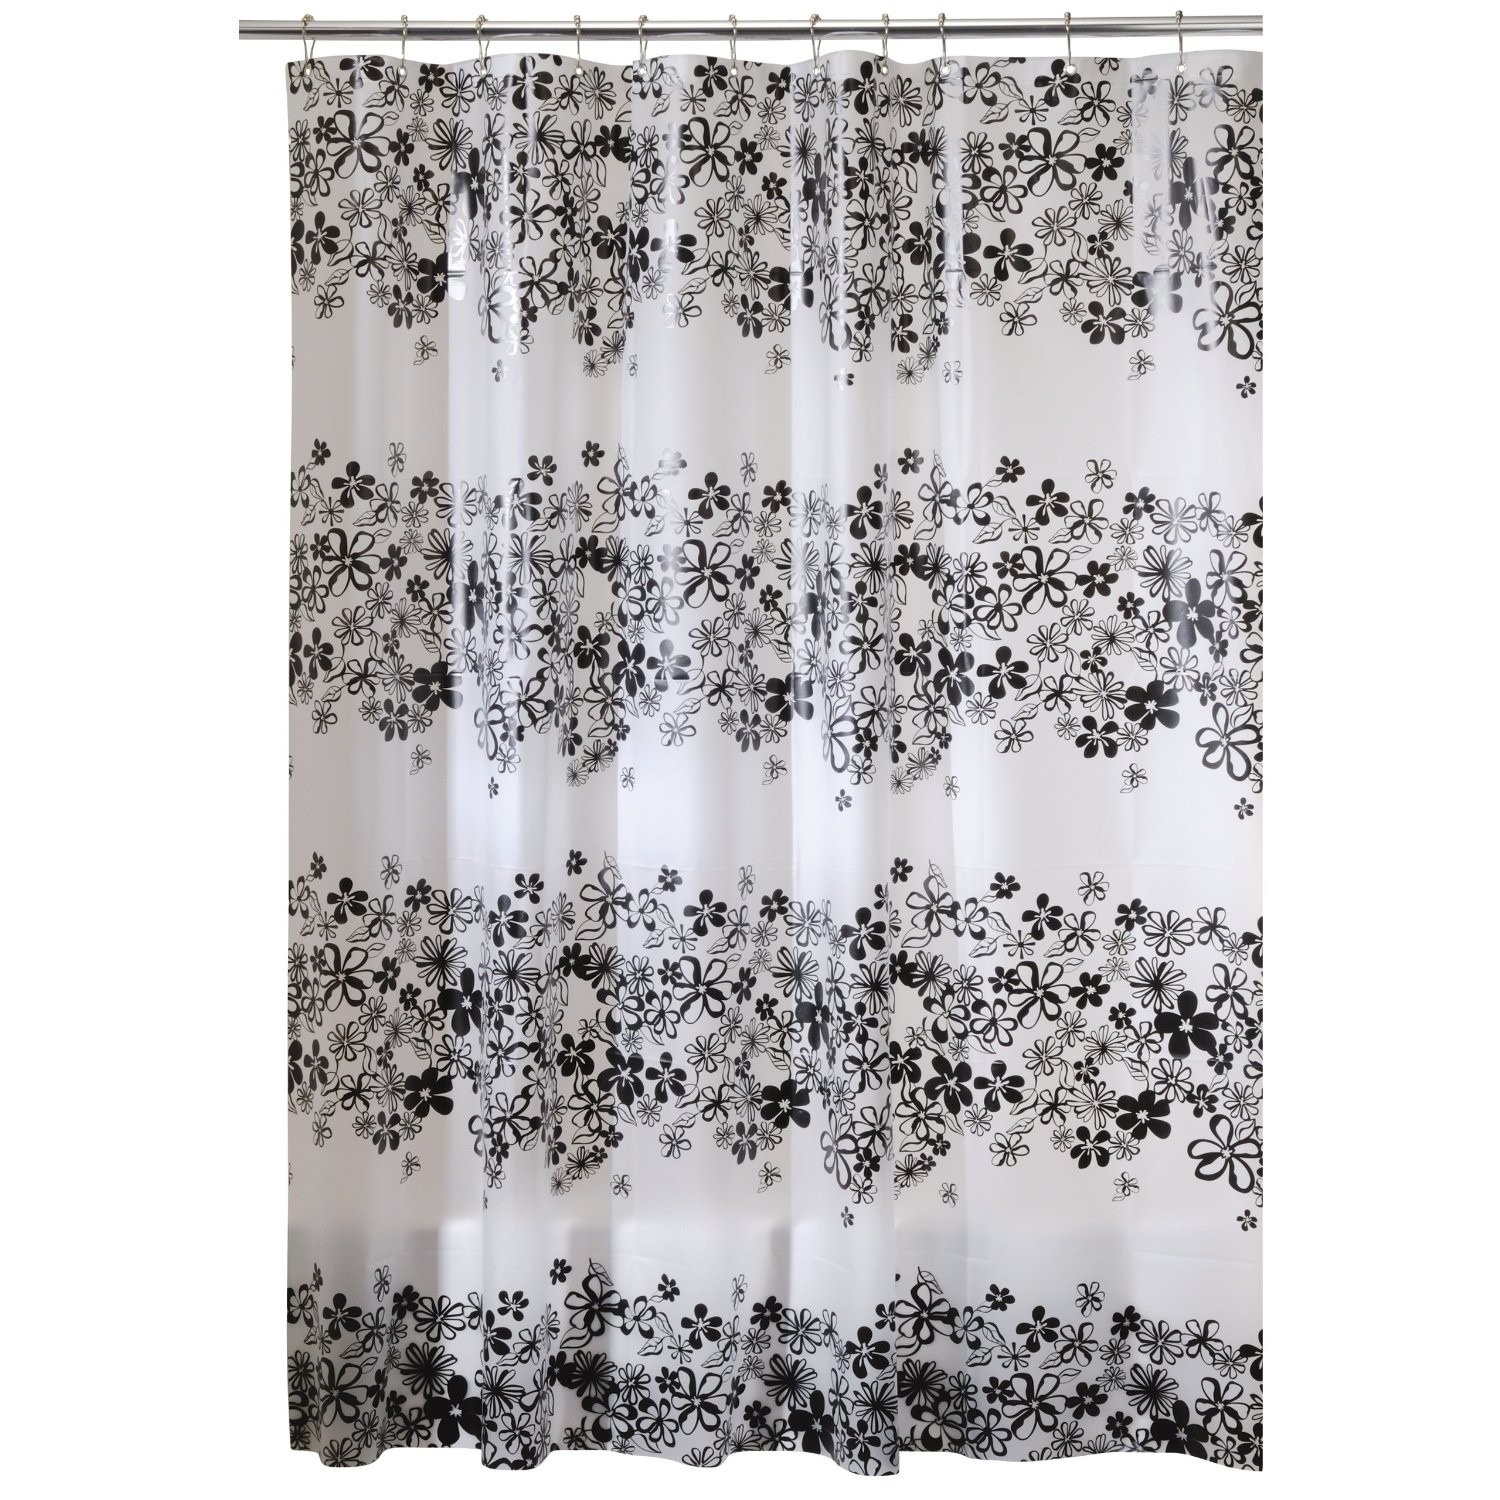 Interdesign fiore eva stall size shower curtain black 54 inches